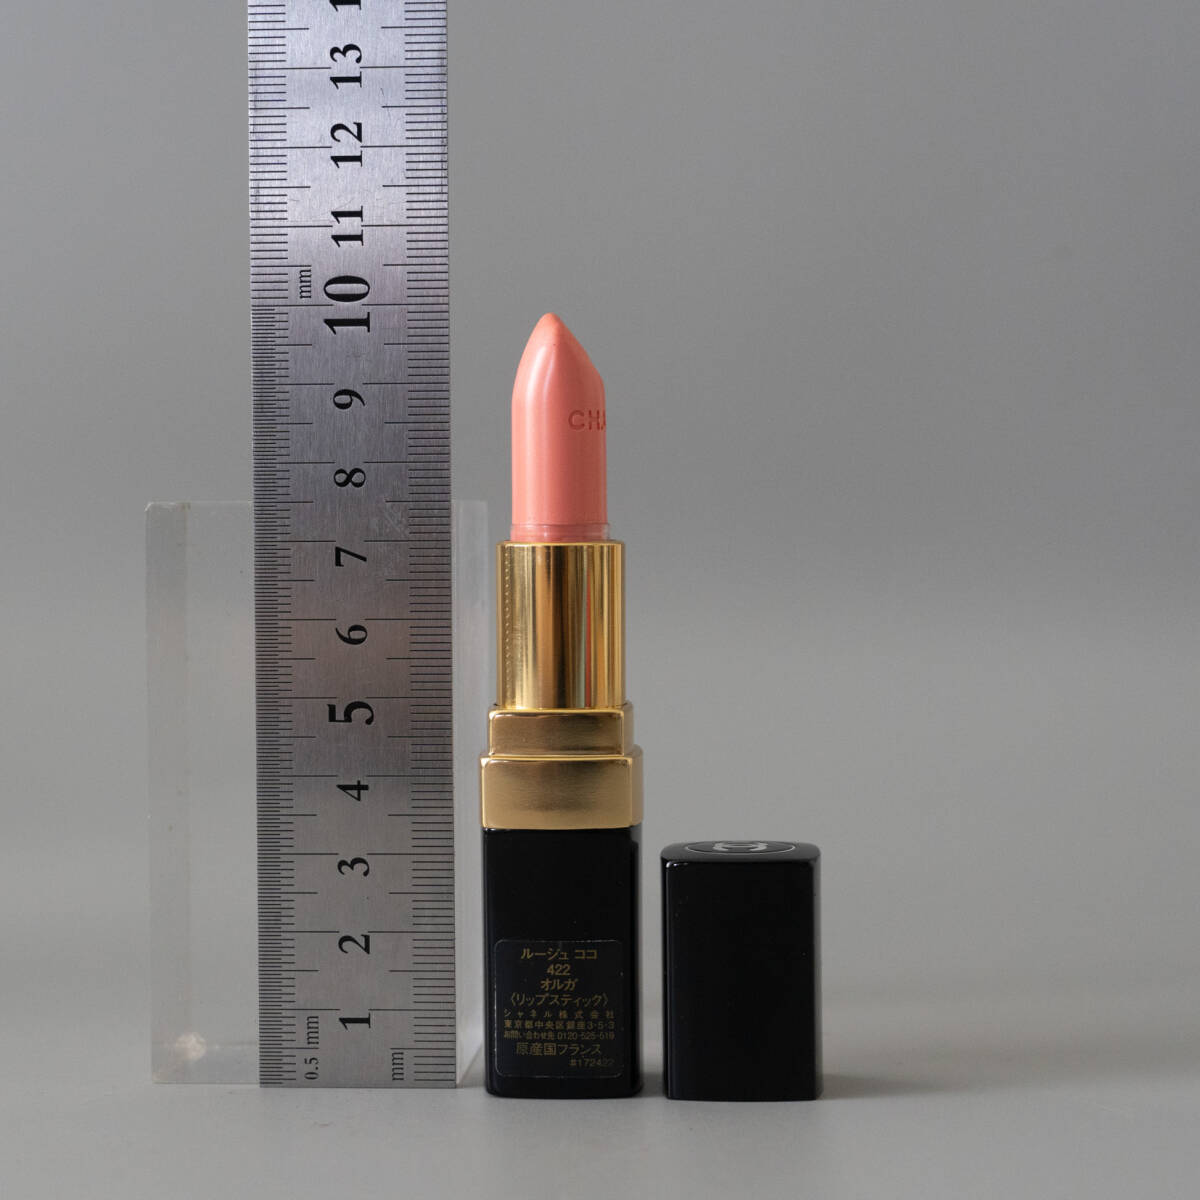 CHANEL Chanel rouge here 422oruga lipstick lipstick cosme 